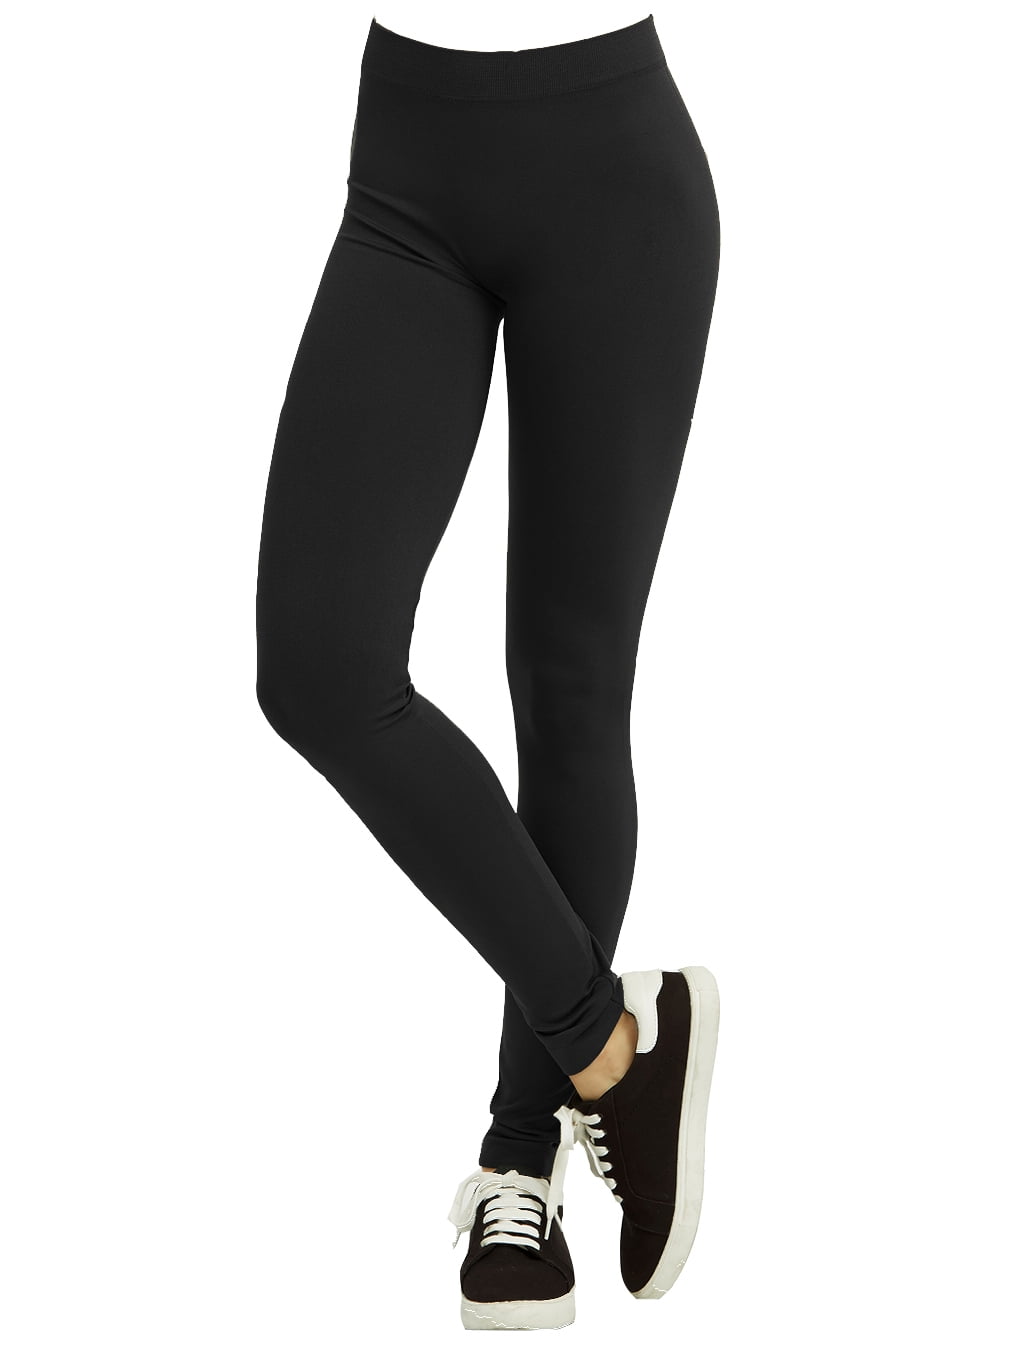 Gallery | Shiny leggings, Wet look leggings, Shiny black leggings